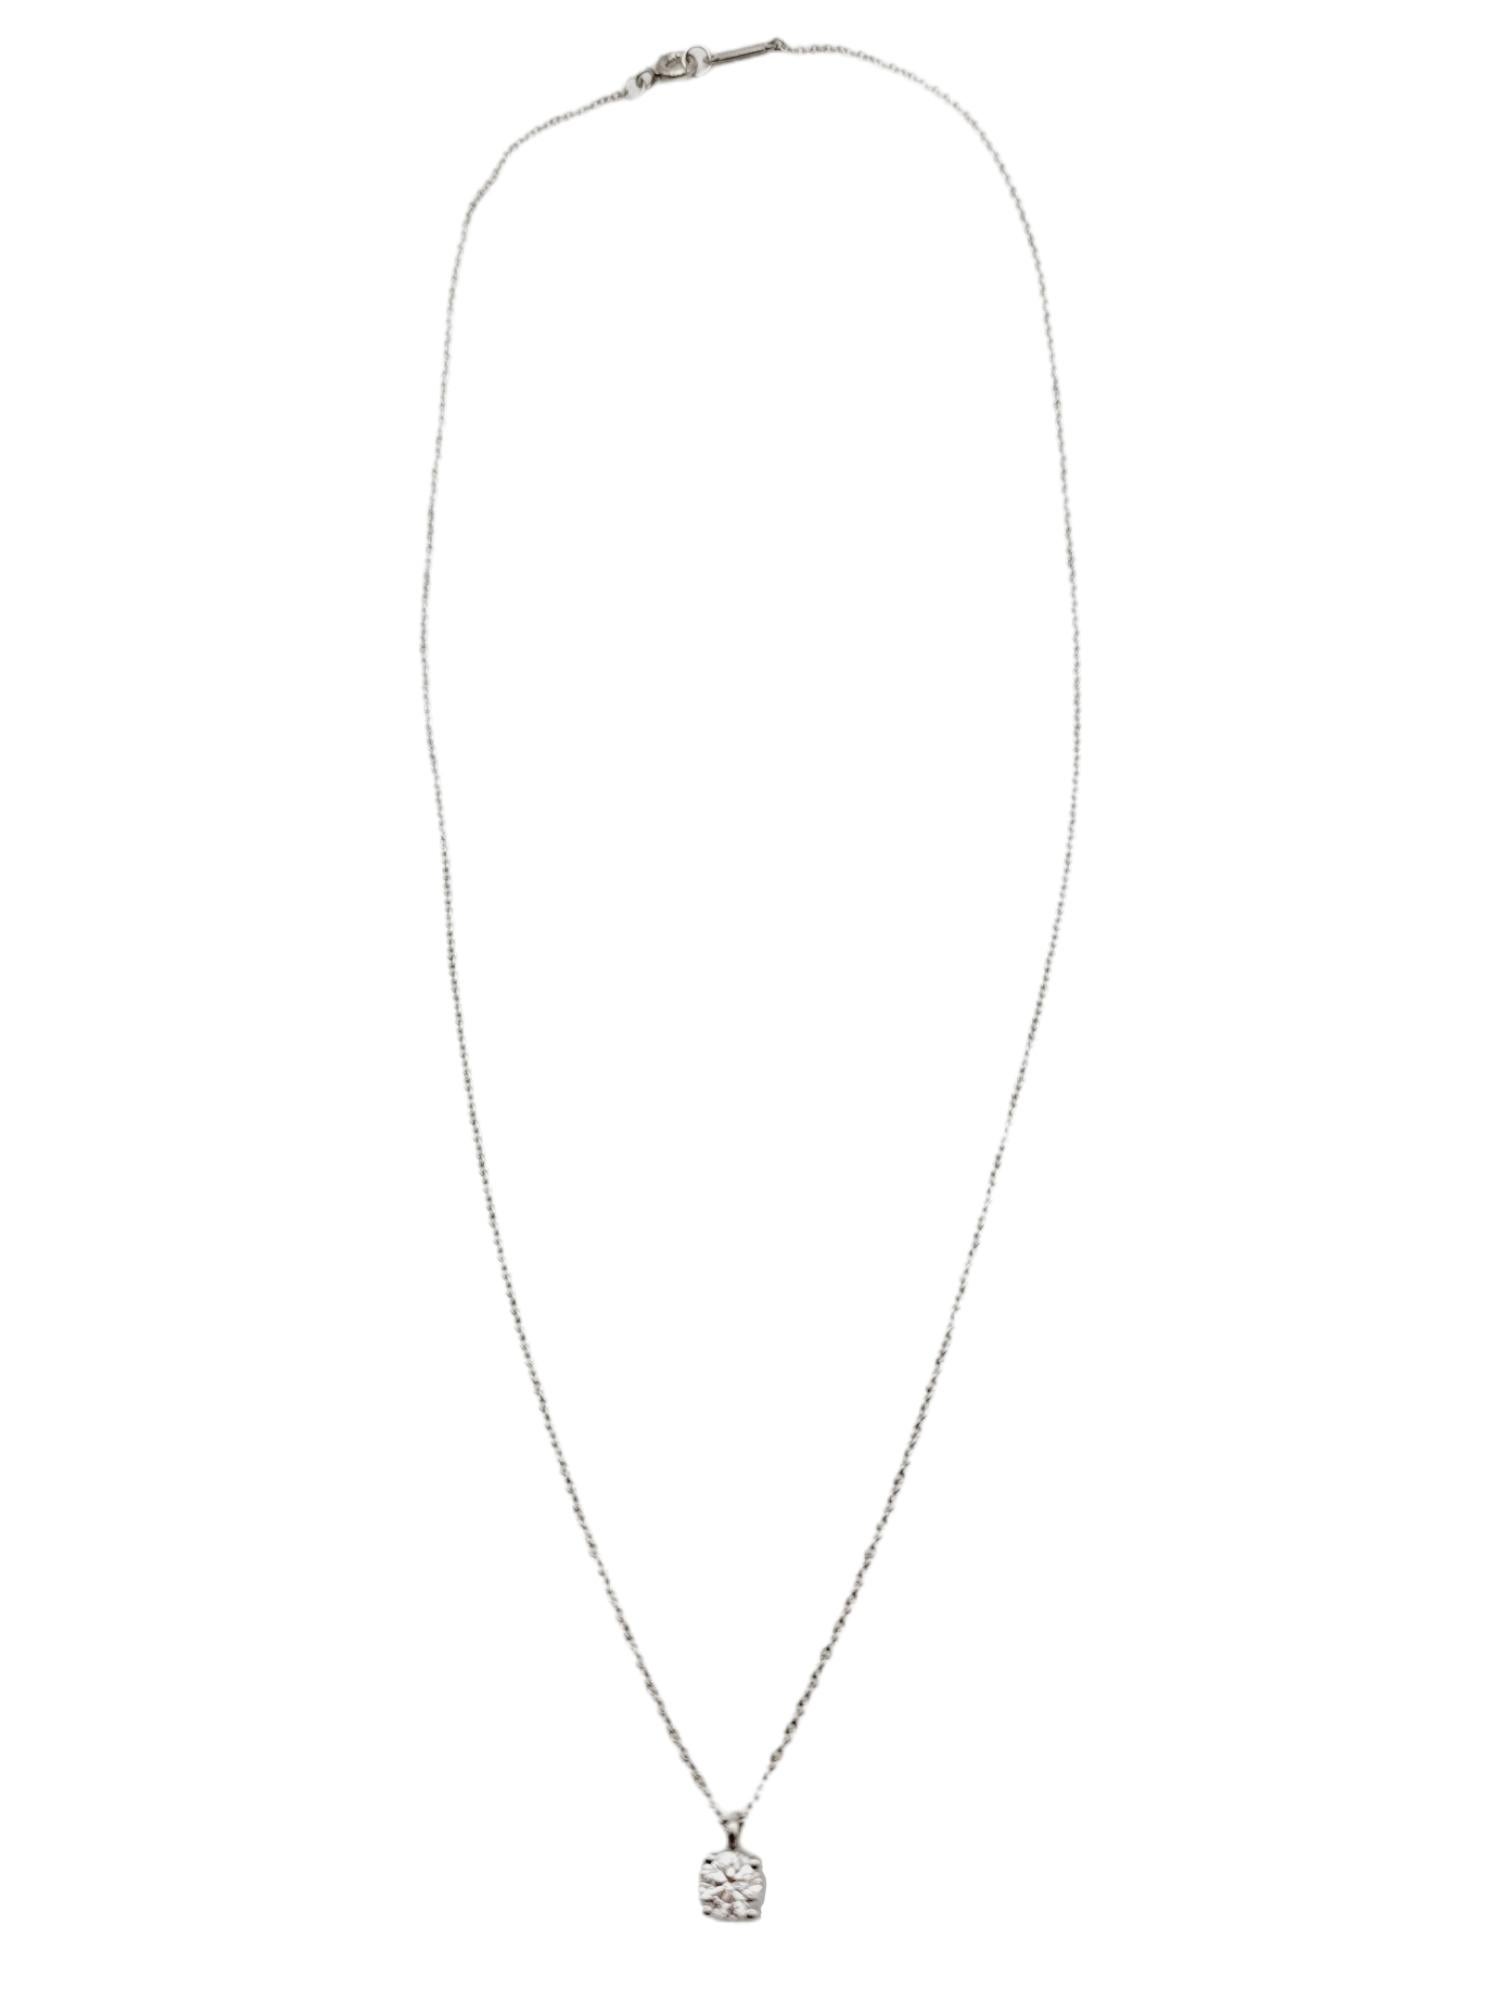 Tiffany & Co. Round Diamond Solitaire Platinum Necklace .39 Carat F / VVS2 1